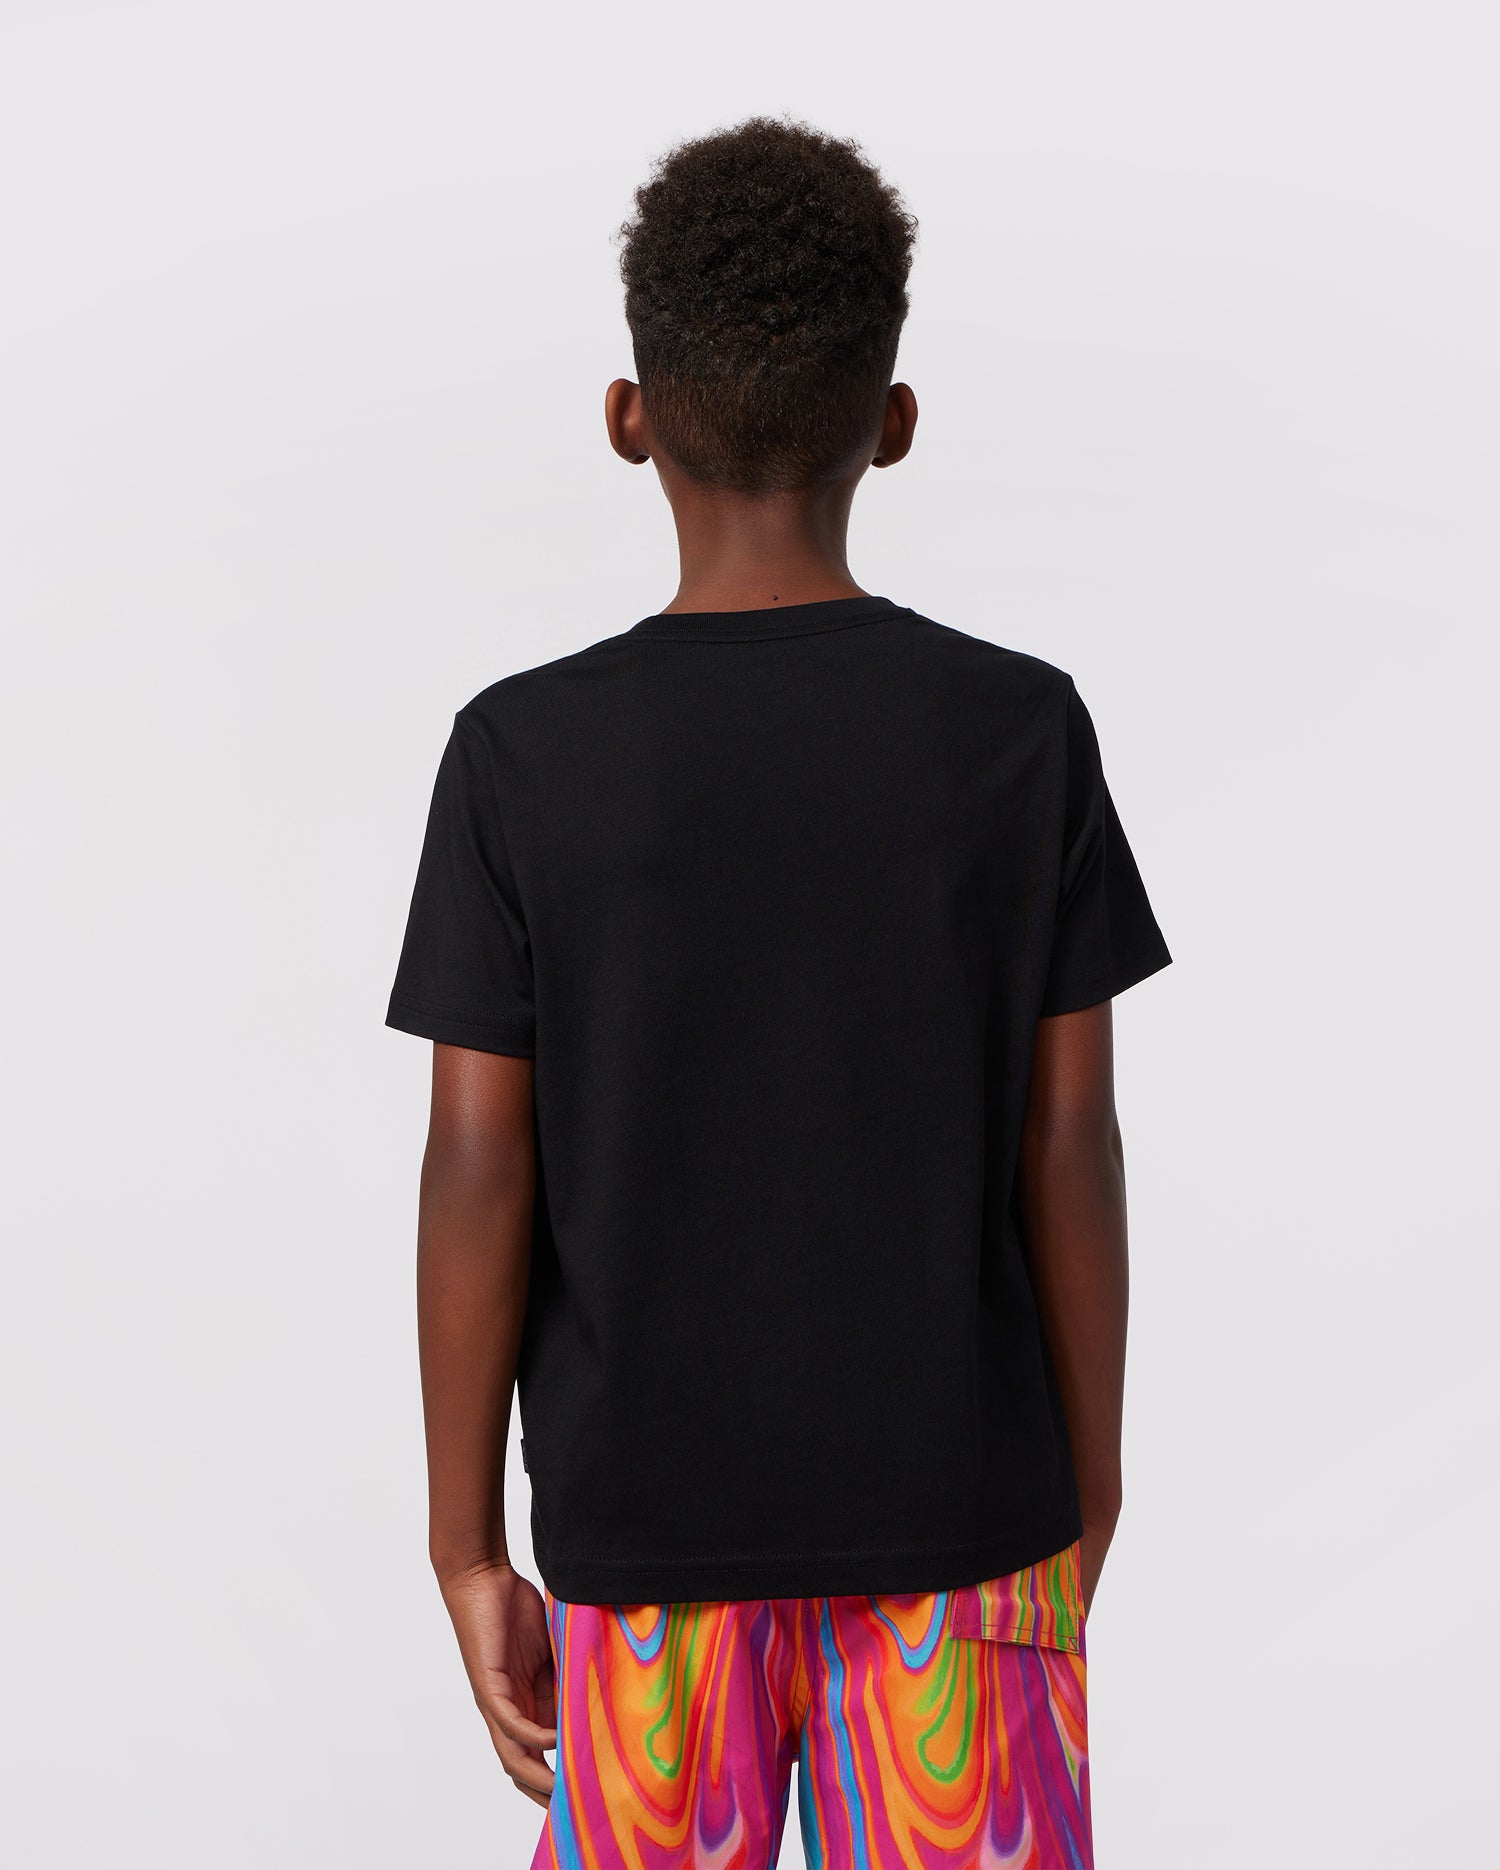 Psycho Bunny Kids Gresham Embroidered Sweatshirt (Little Kids/Big Kids)  (Black) Boy's Clothing - ShopStyle